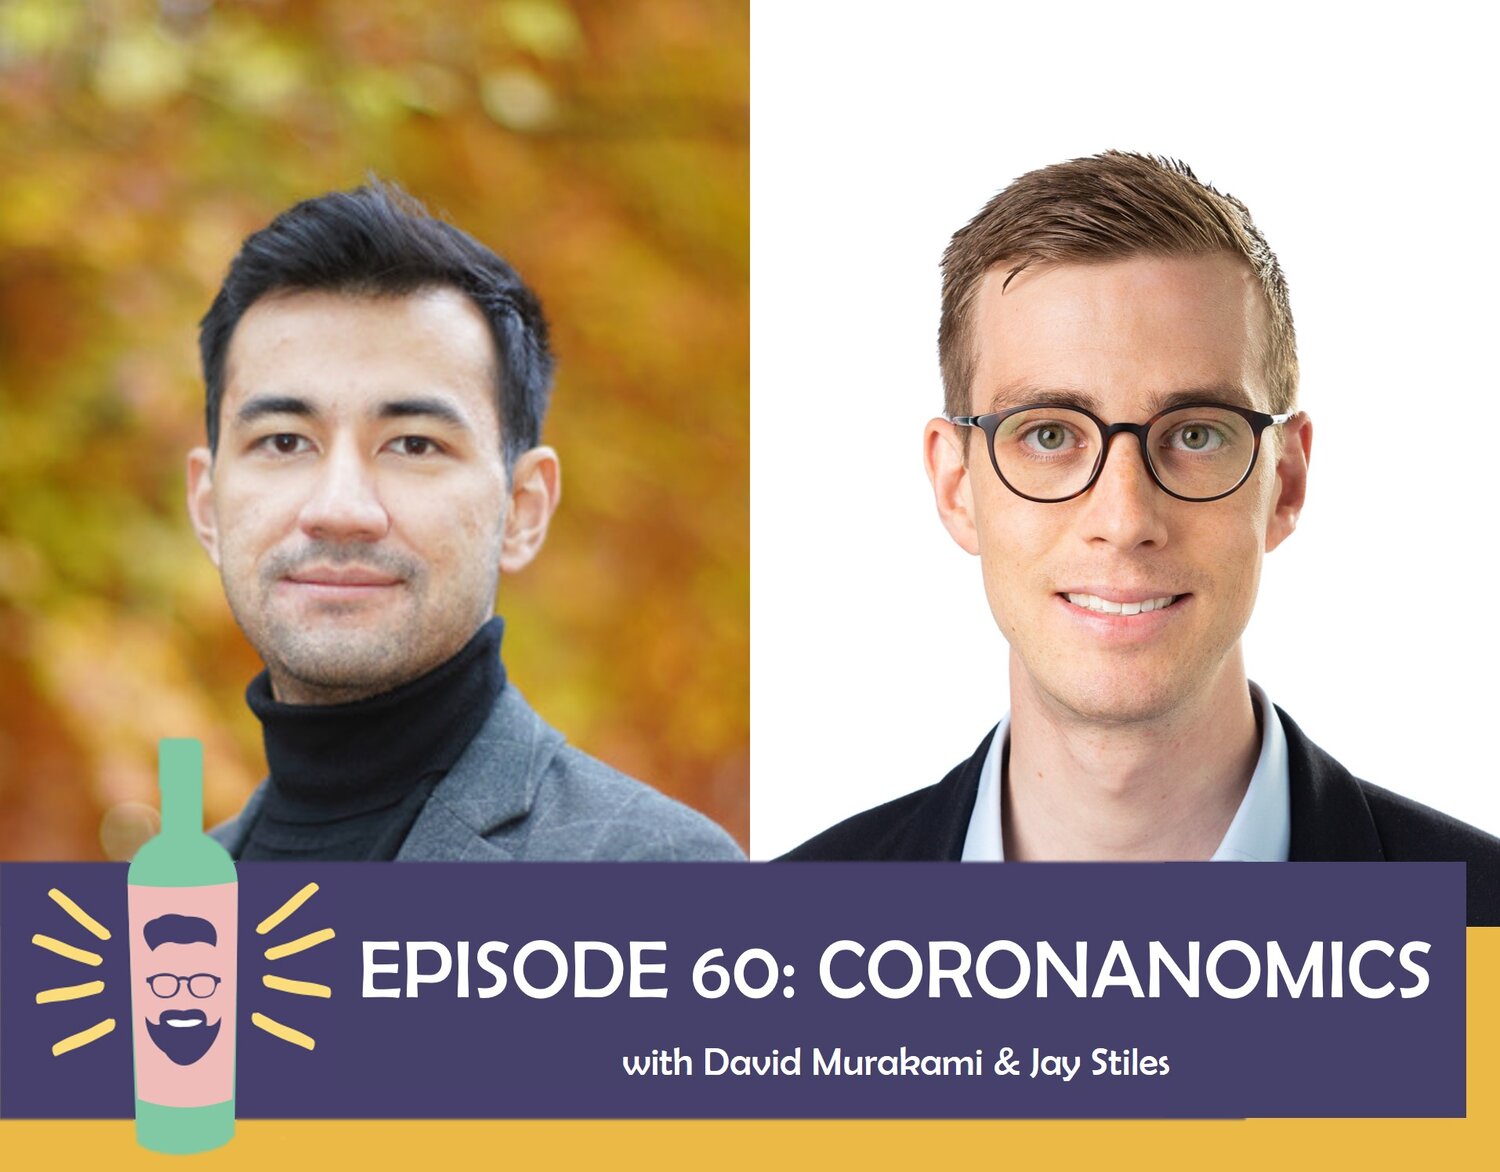 Episode 60 - Coronanomics with David Murakami and Jay Stiles